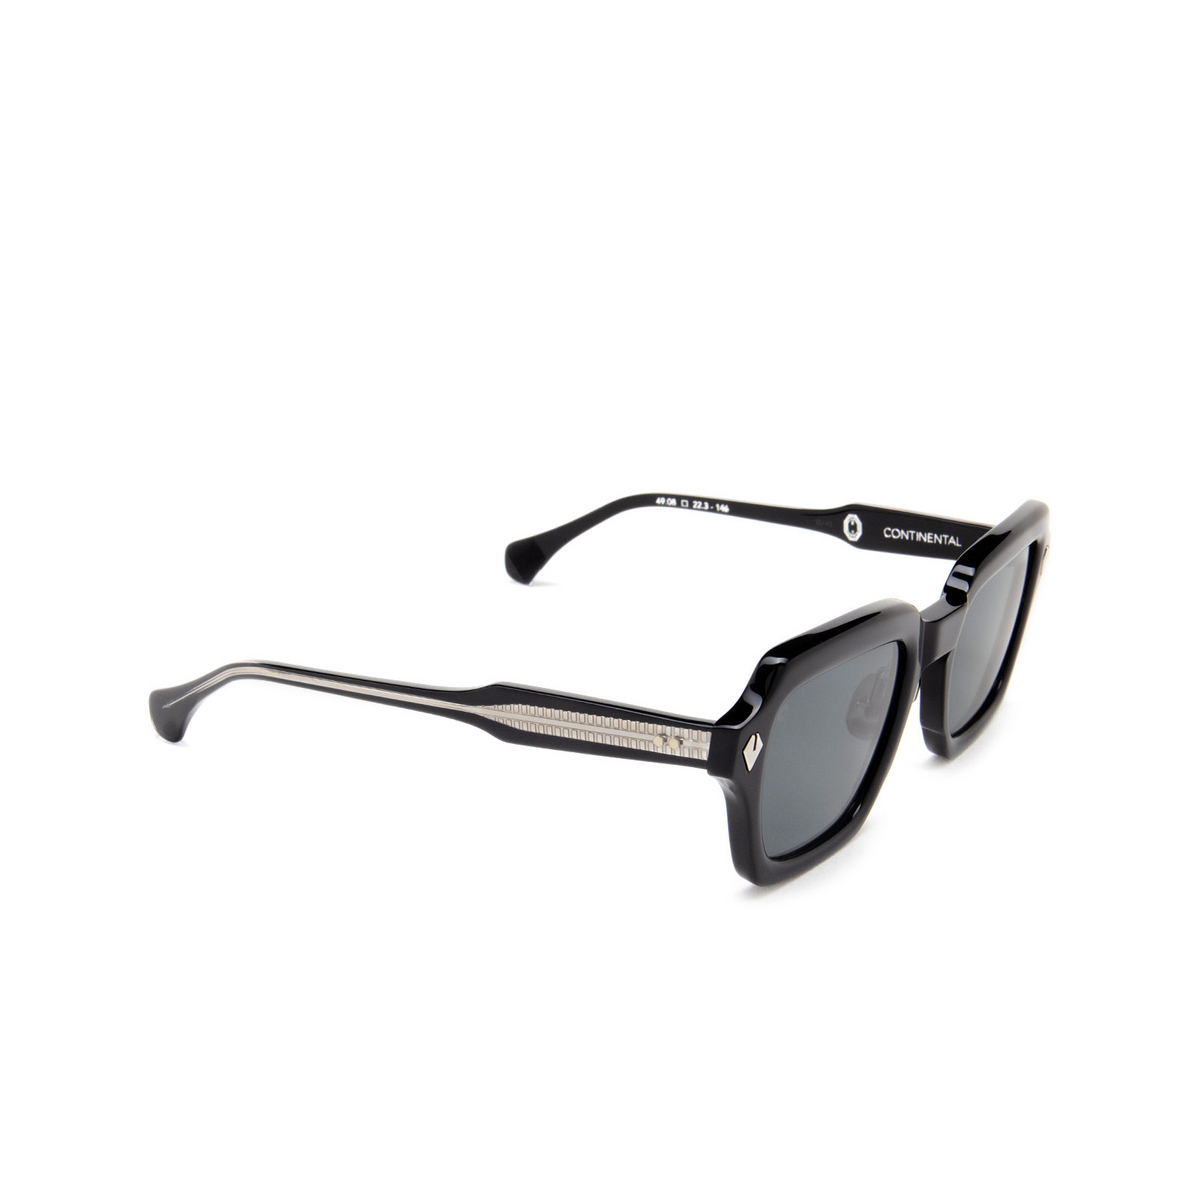 T Henri CONTINENTAL Sunglasses SHADOW - three-quarters view